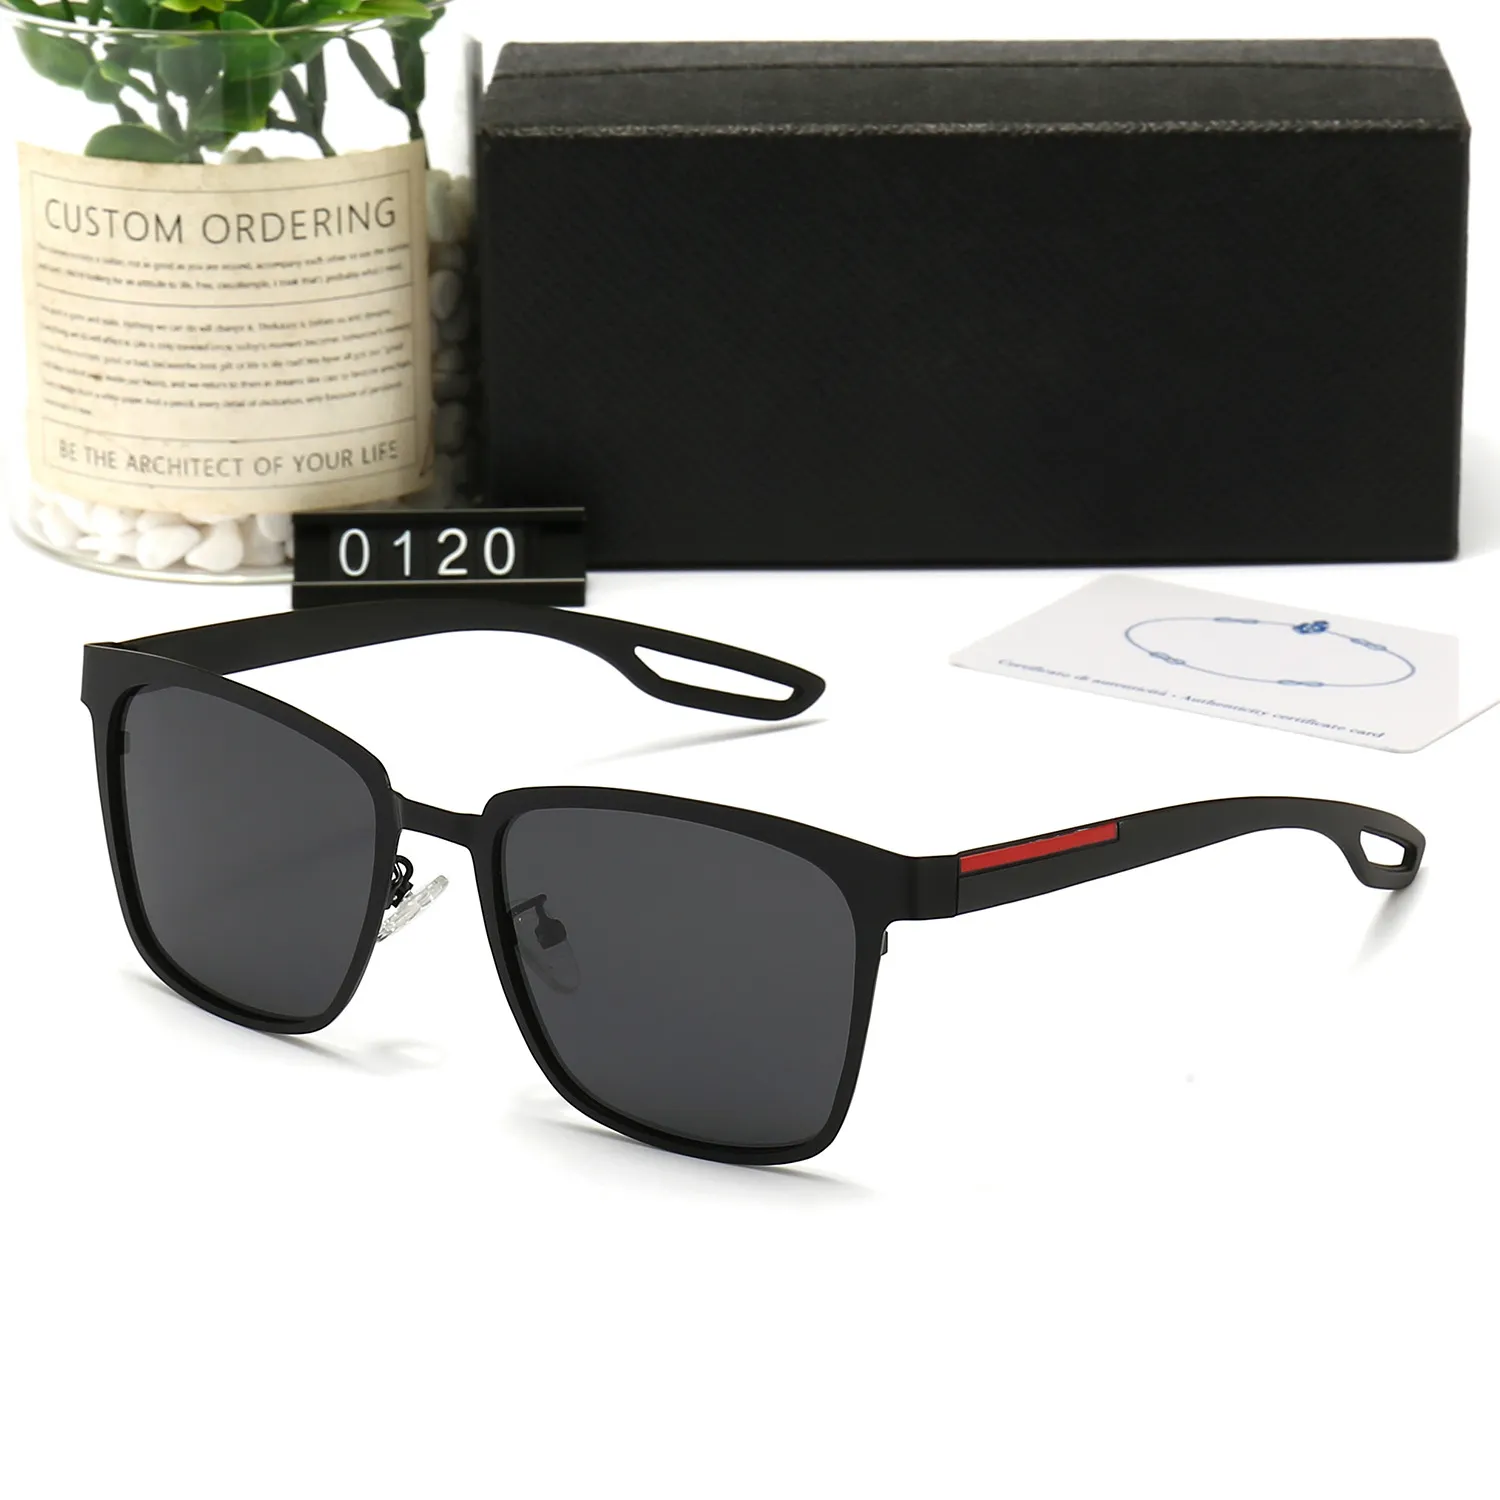 Retro Sunglasses Polarized Fashion Luxury Brand Mens Designer Rimless Gold Plated Square Frame Sun Glasses